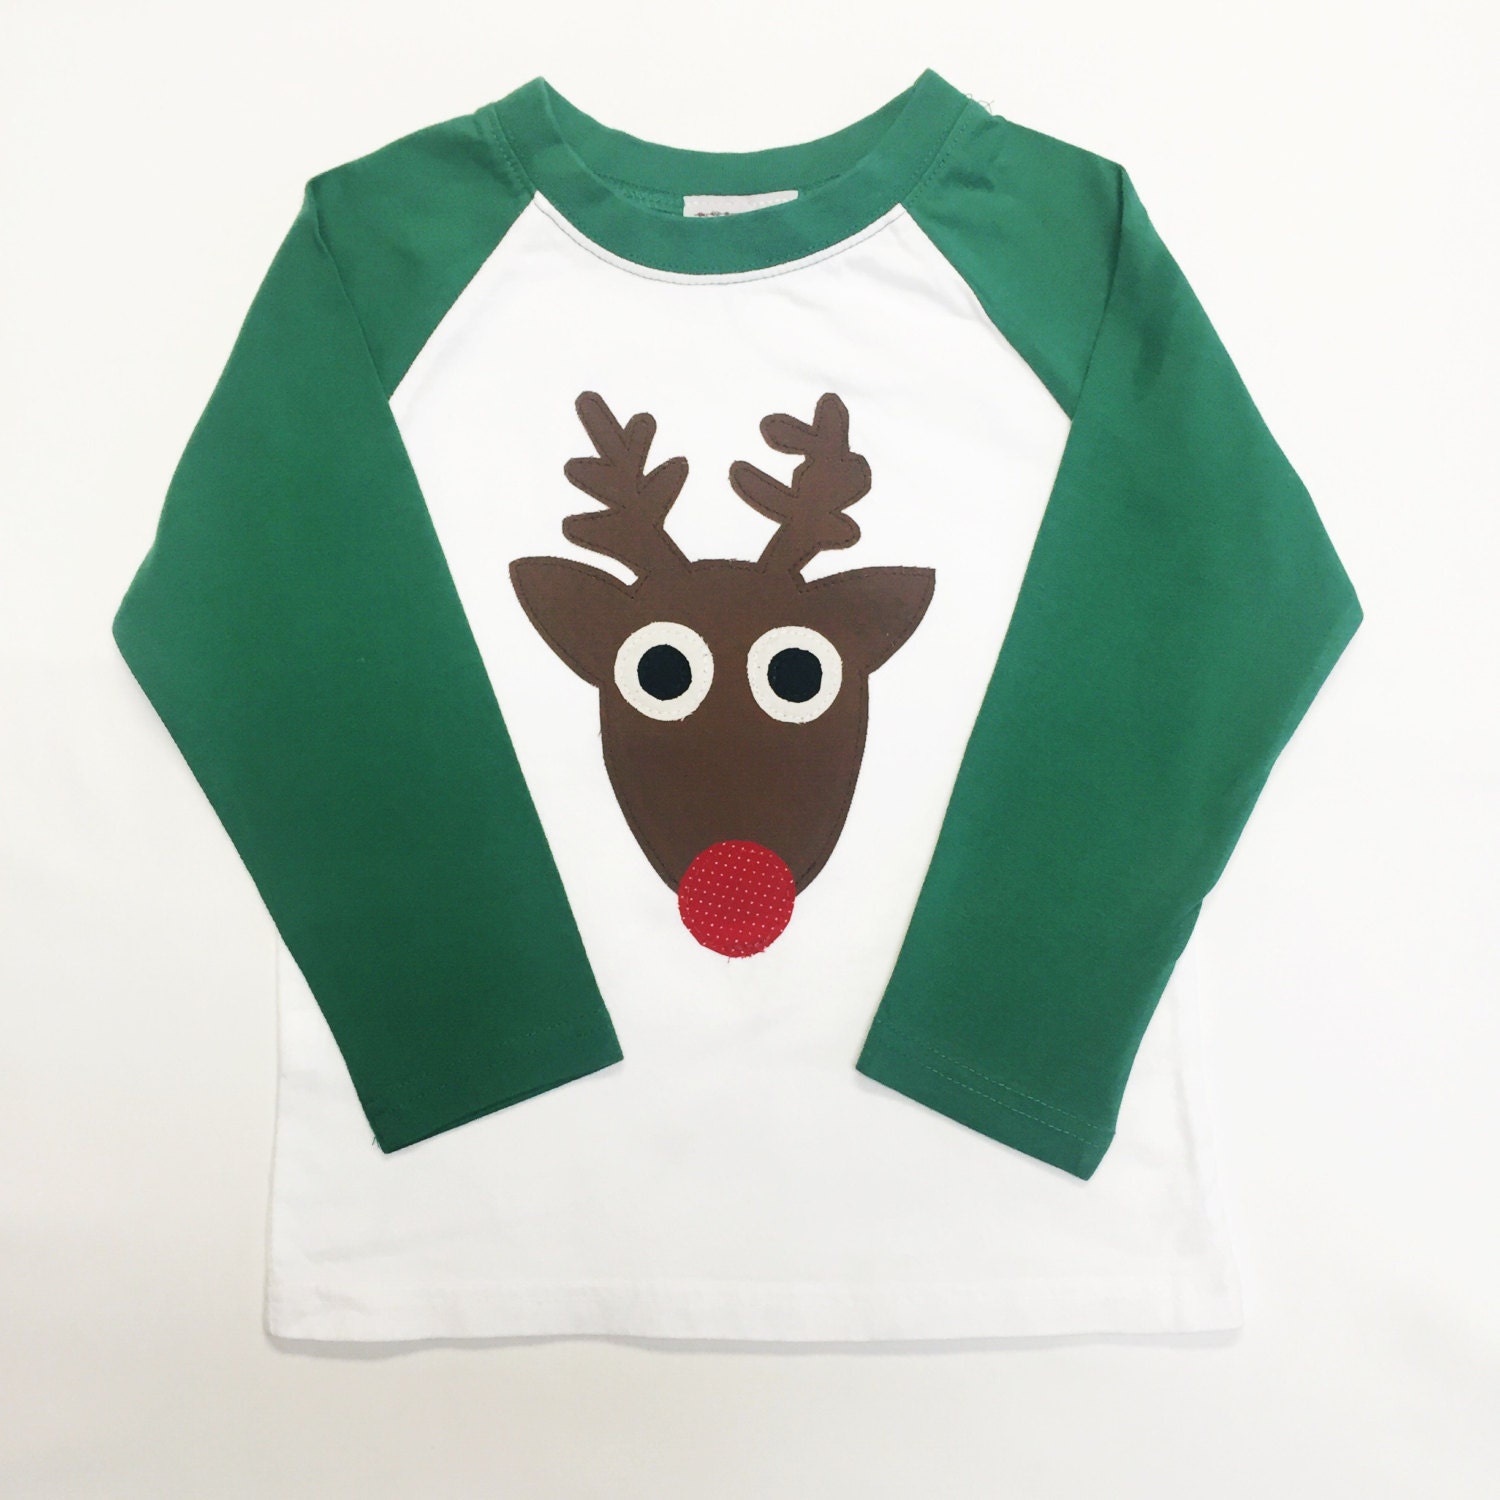 Toddler Boys Christmas shirt Reindeer Appliqué on Green